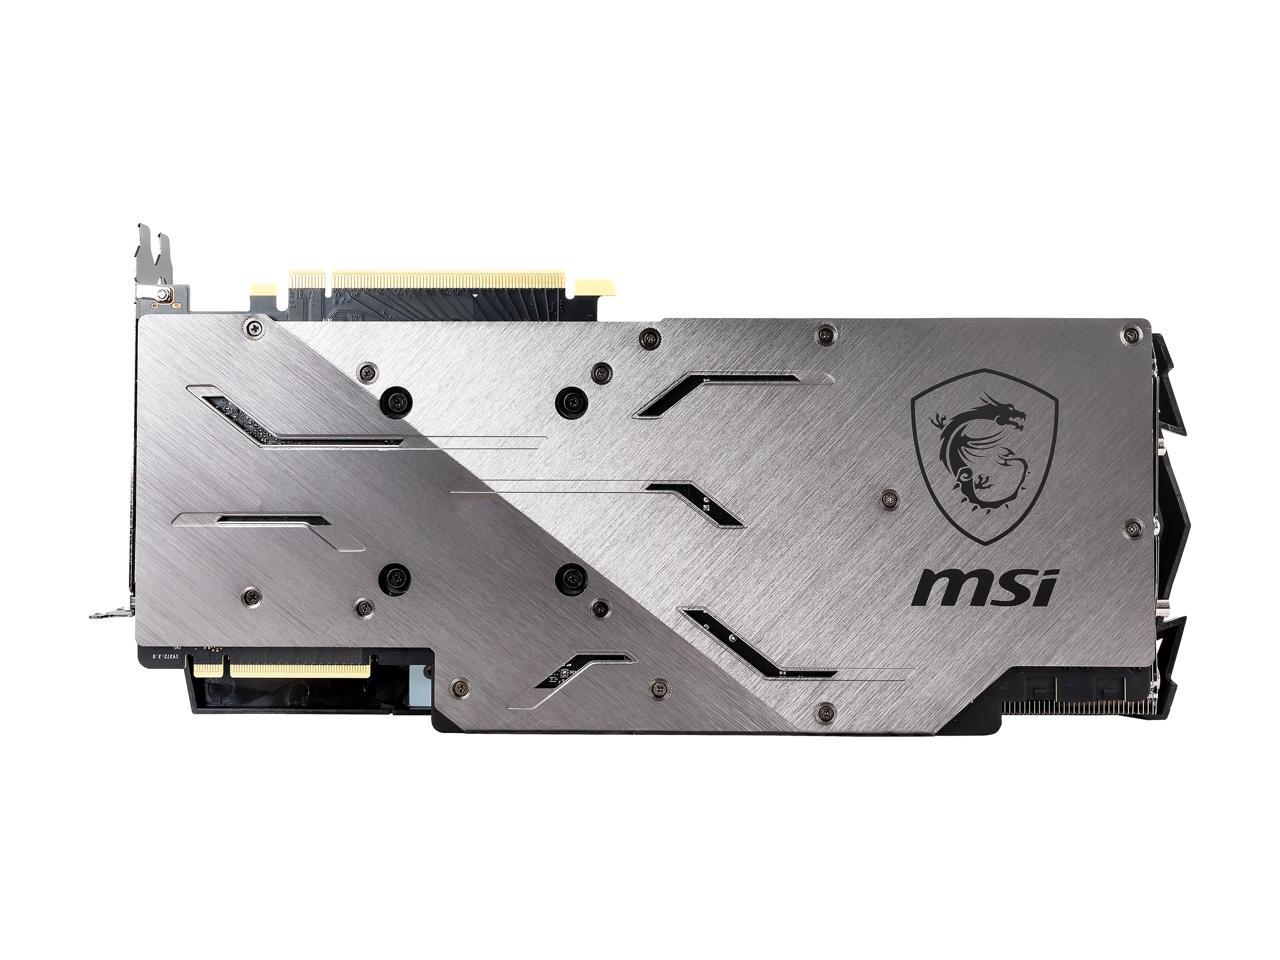 Msi Geforce Rtx 2070 Super 8Gb Gddr6 Pci Express 3.0 X16 Sli Support Video Card Rtx 2070 Super Gaming X Trio